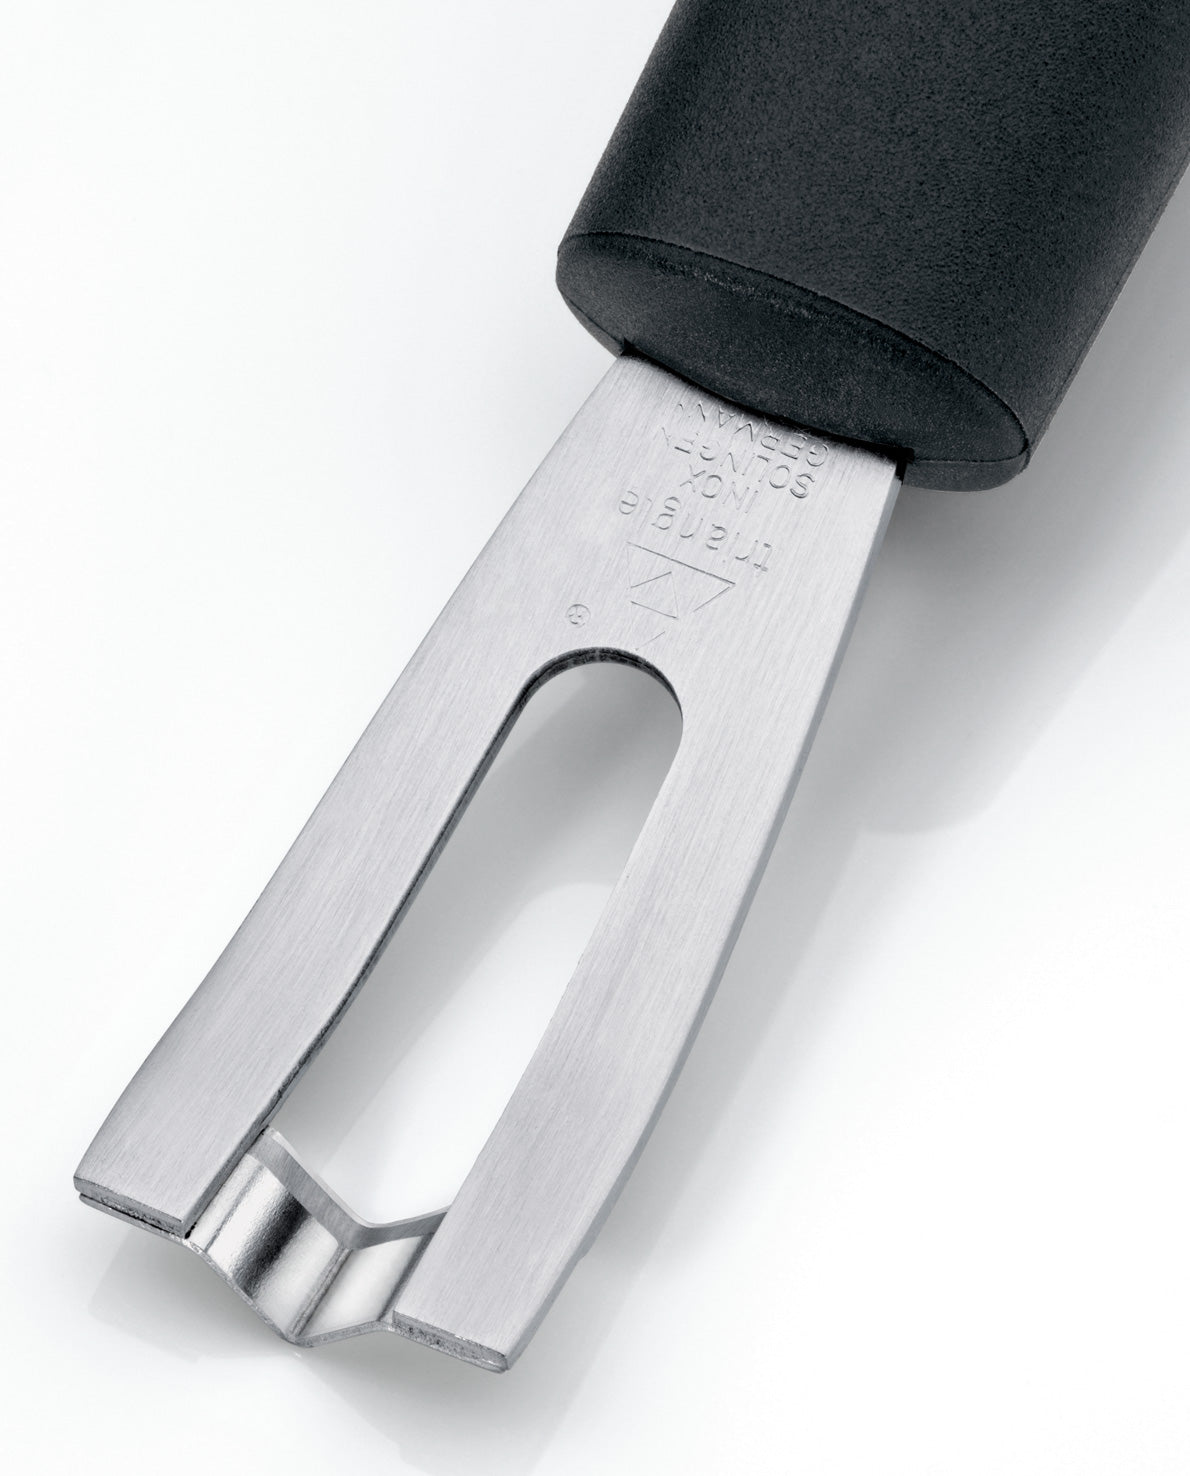 Triangular Canal knife -7201604